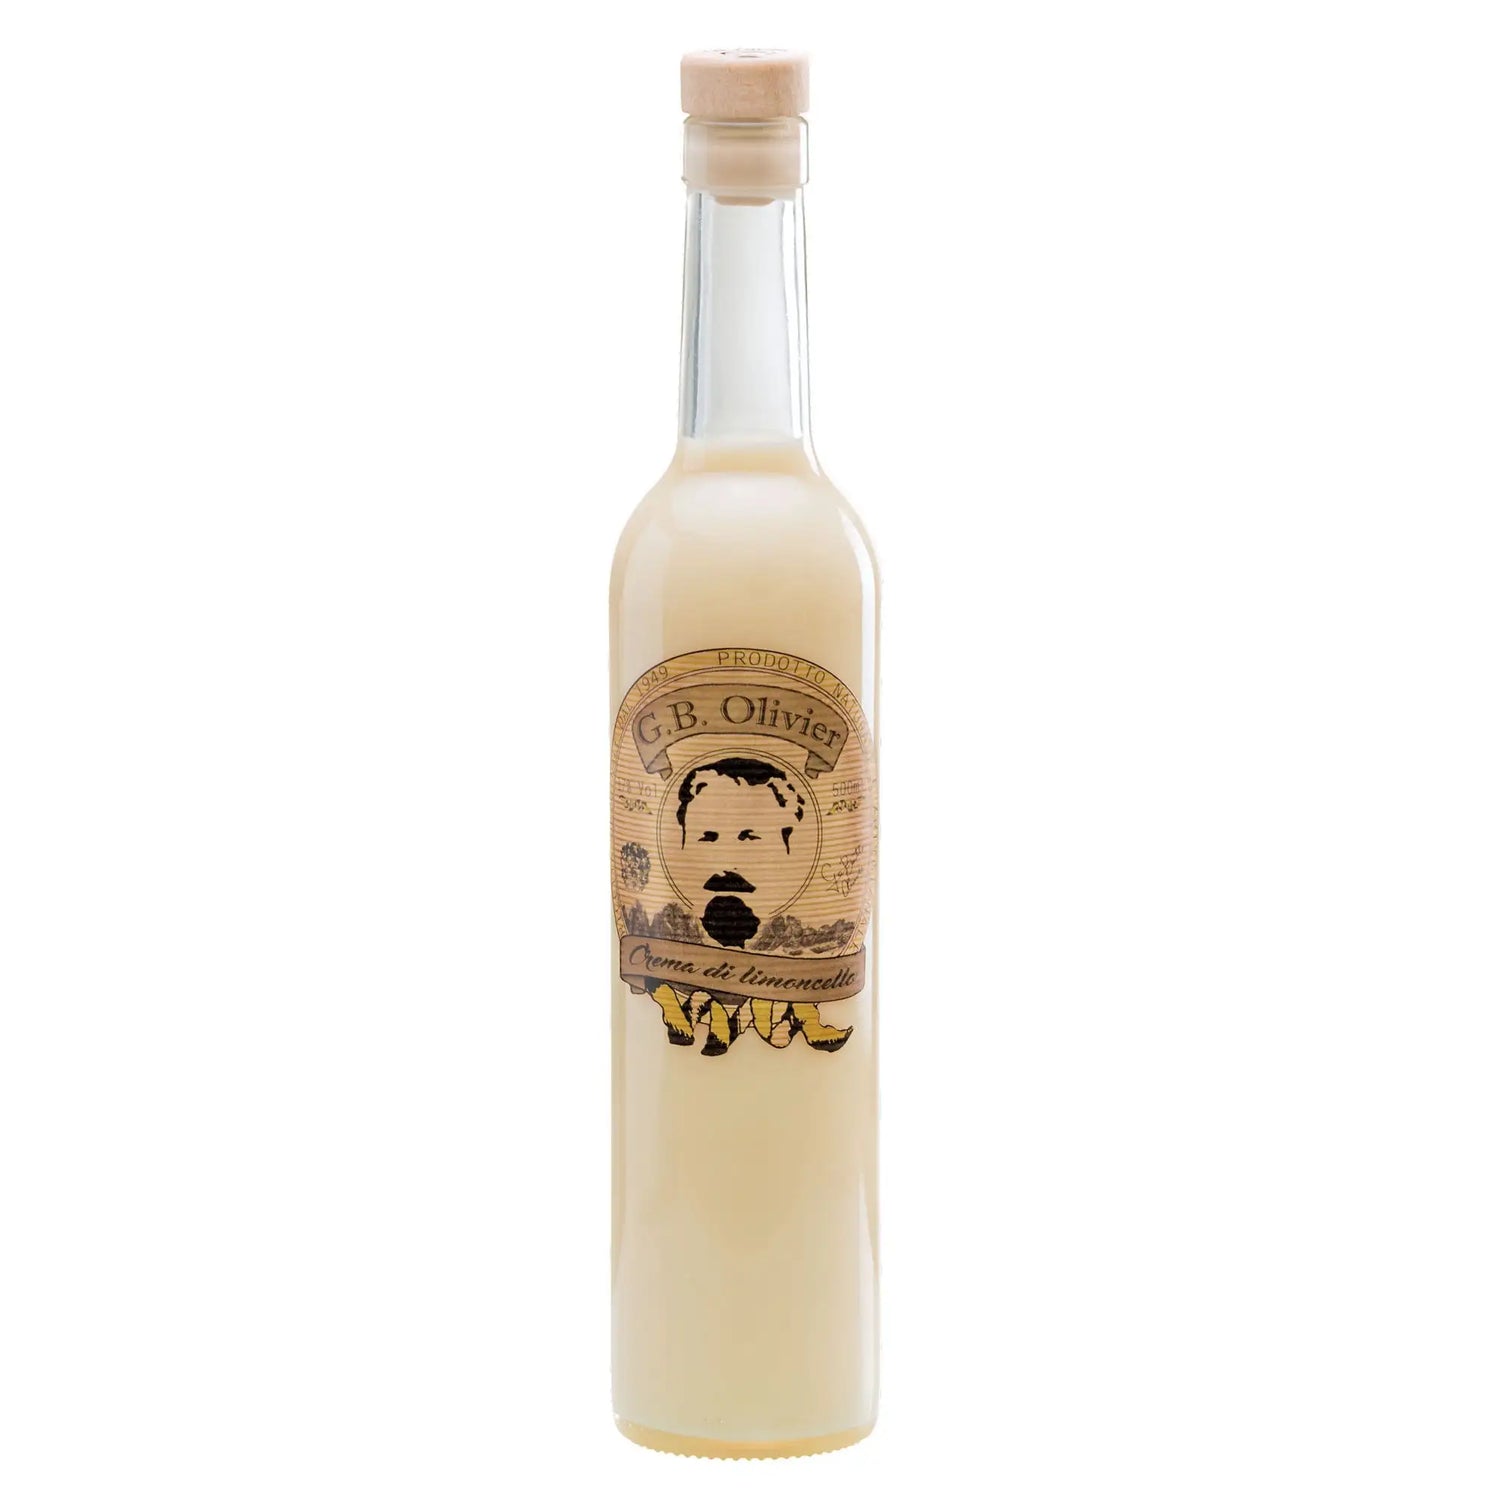 Botella crema de limoncello olivier artesanal natural y premium 17 grados alcohol